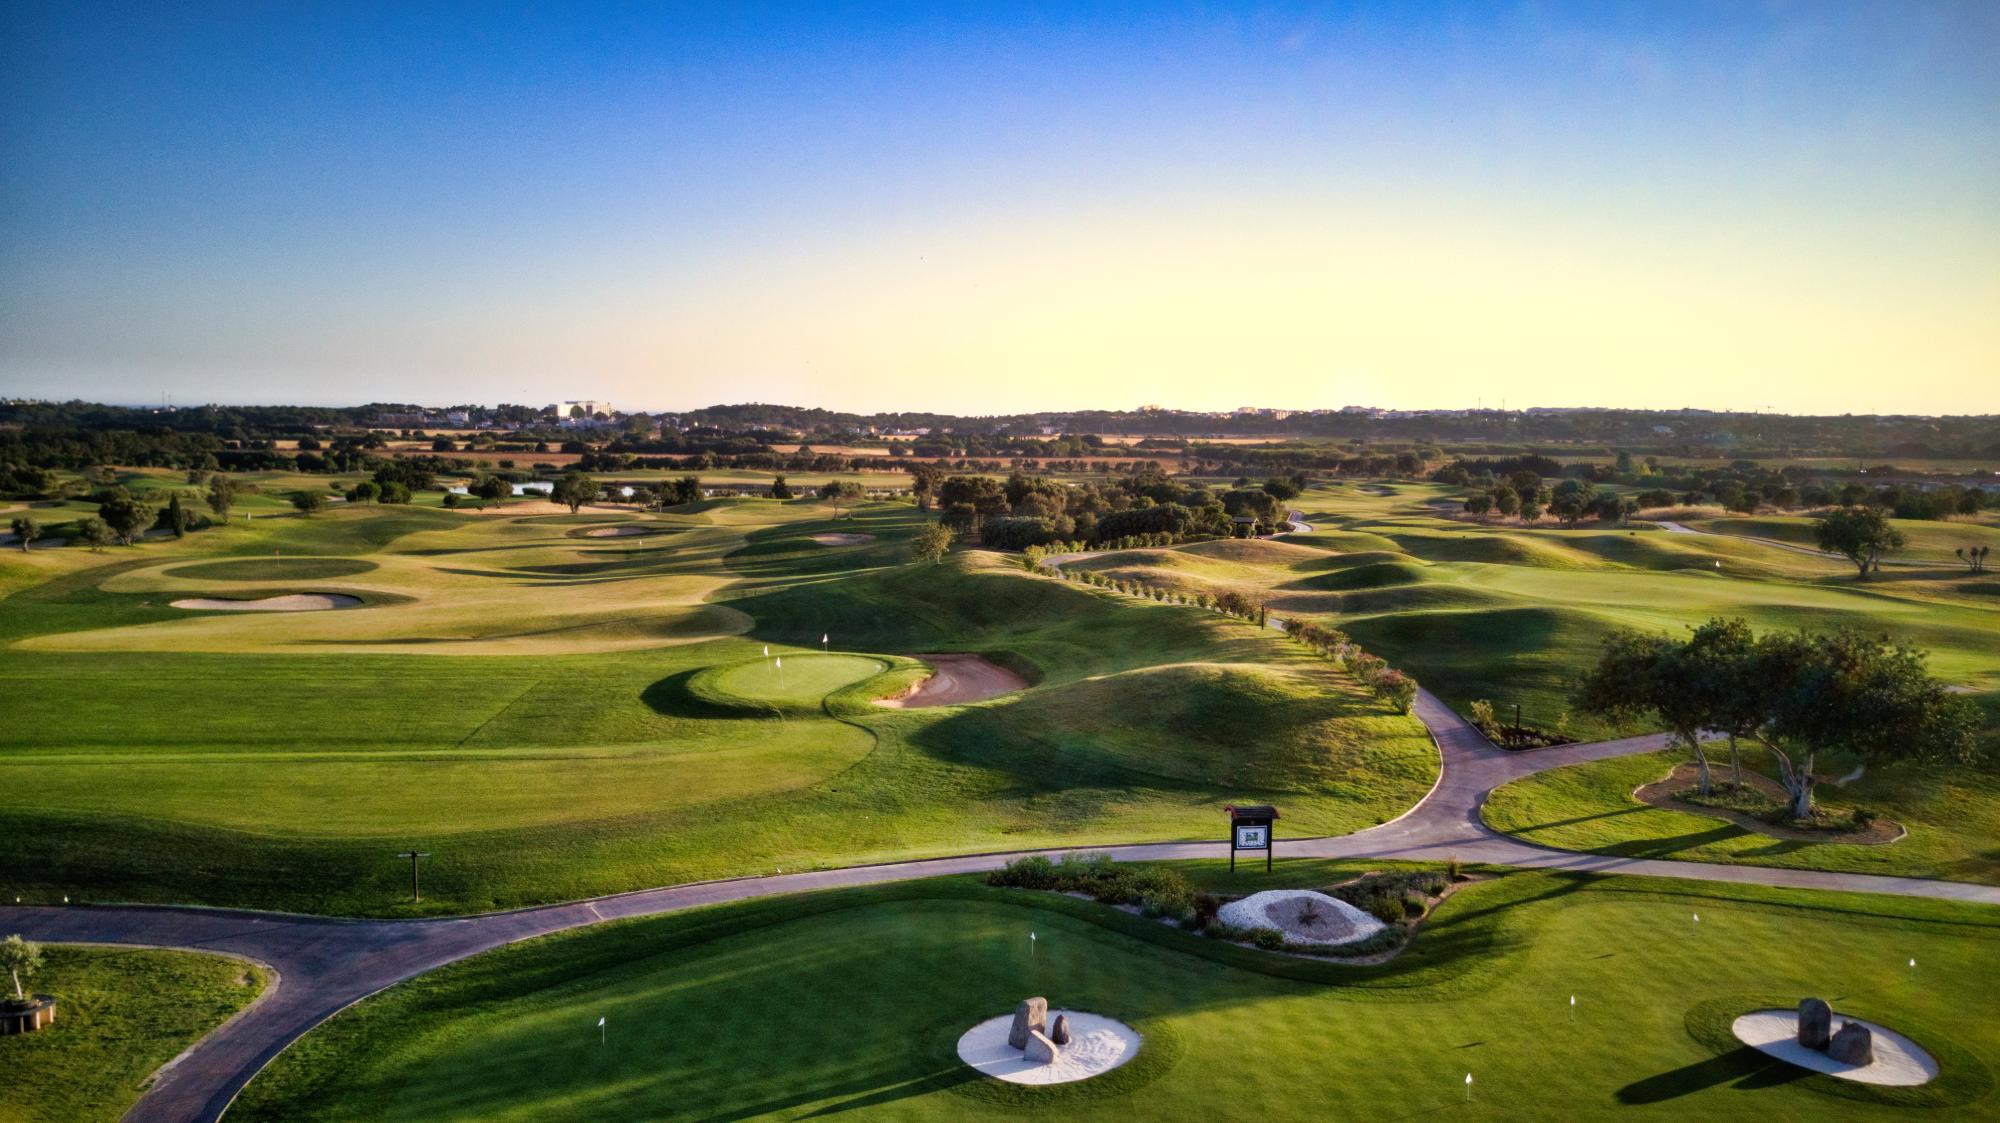 Dom Pedro Golf Course Panoramic